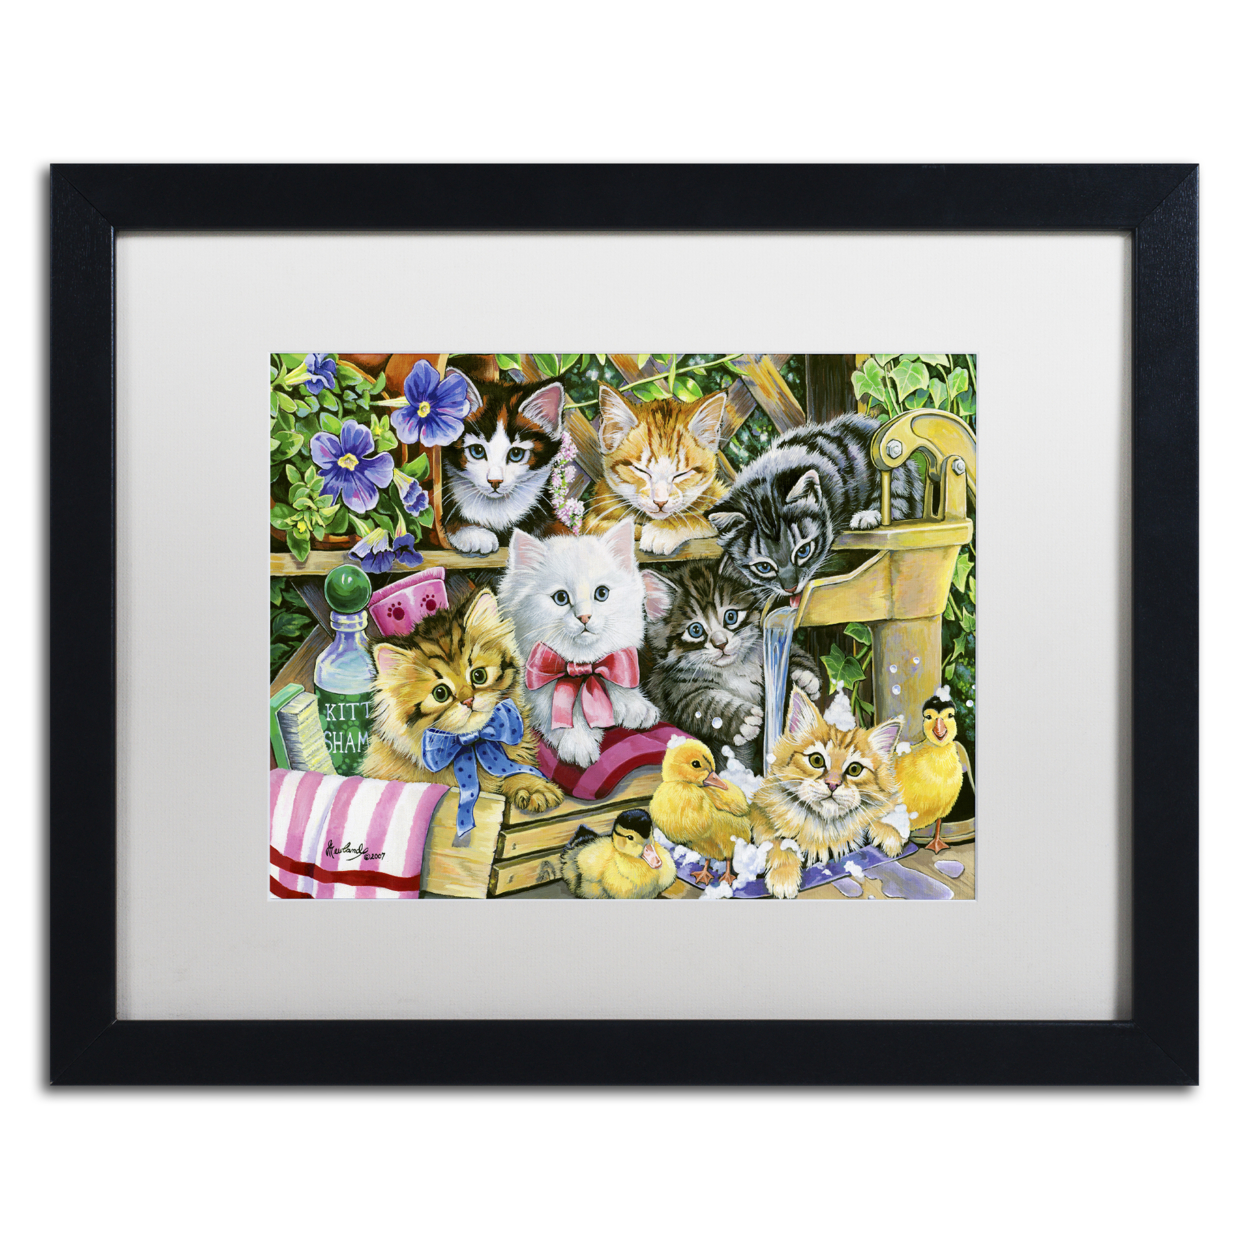 Jenny Newland 'Bathtime Kittens' Black Wooden Framed Art 18 X 22 Inches